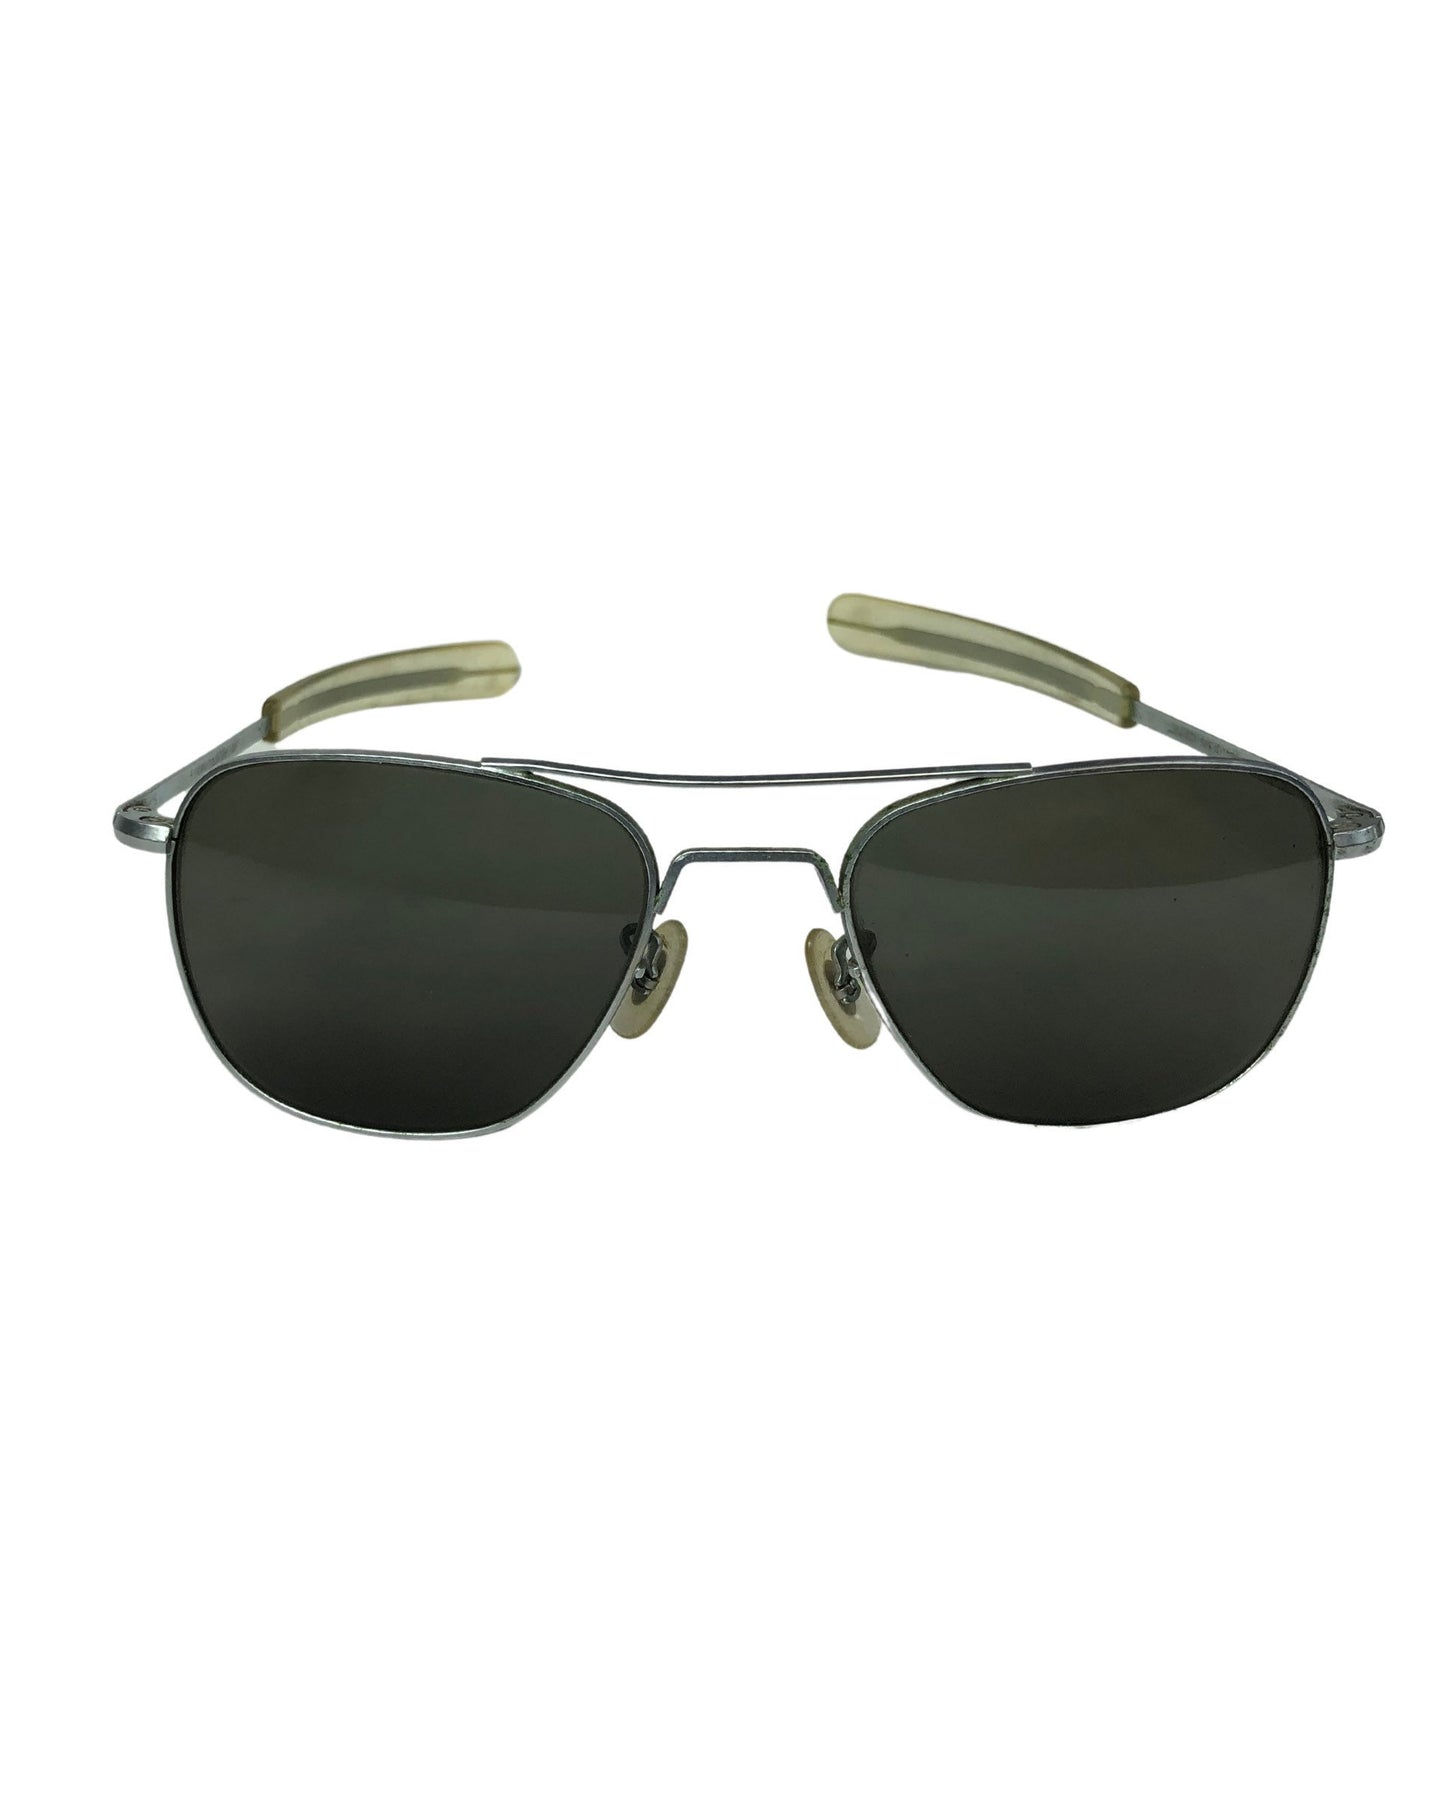 Vintage 1970’s Randolph Engineering Military Silver Aviator Sunglasses